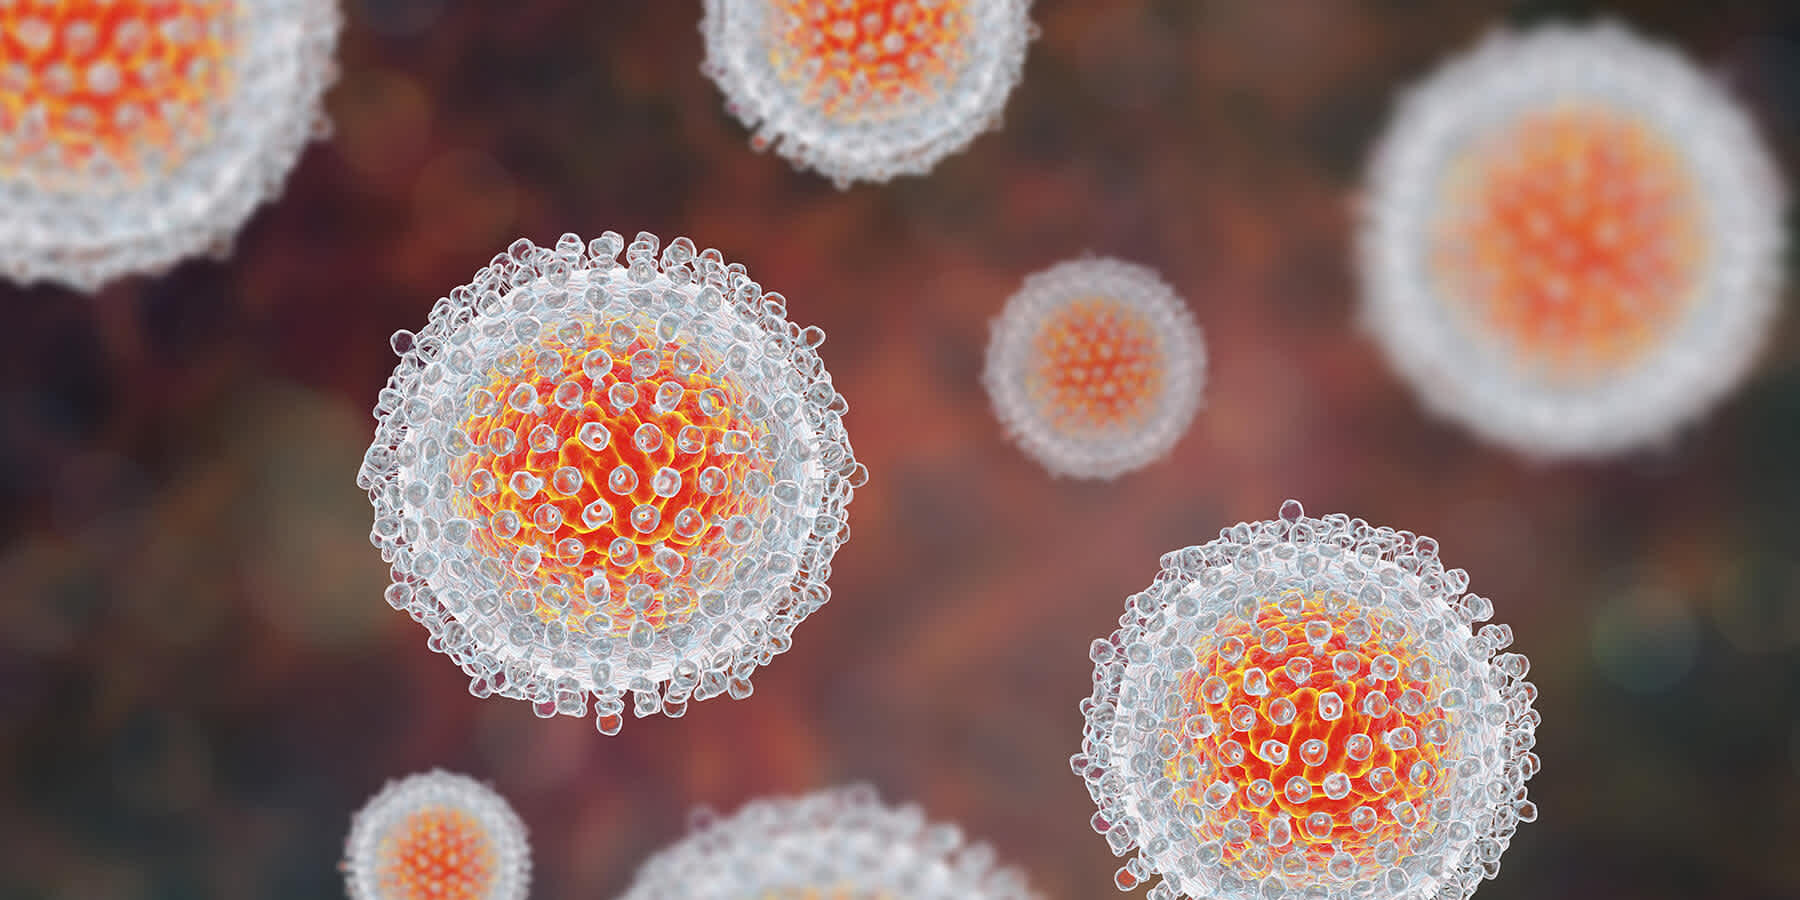 Illustration of genital herpes virus particles